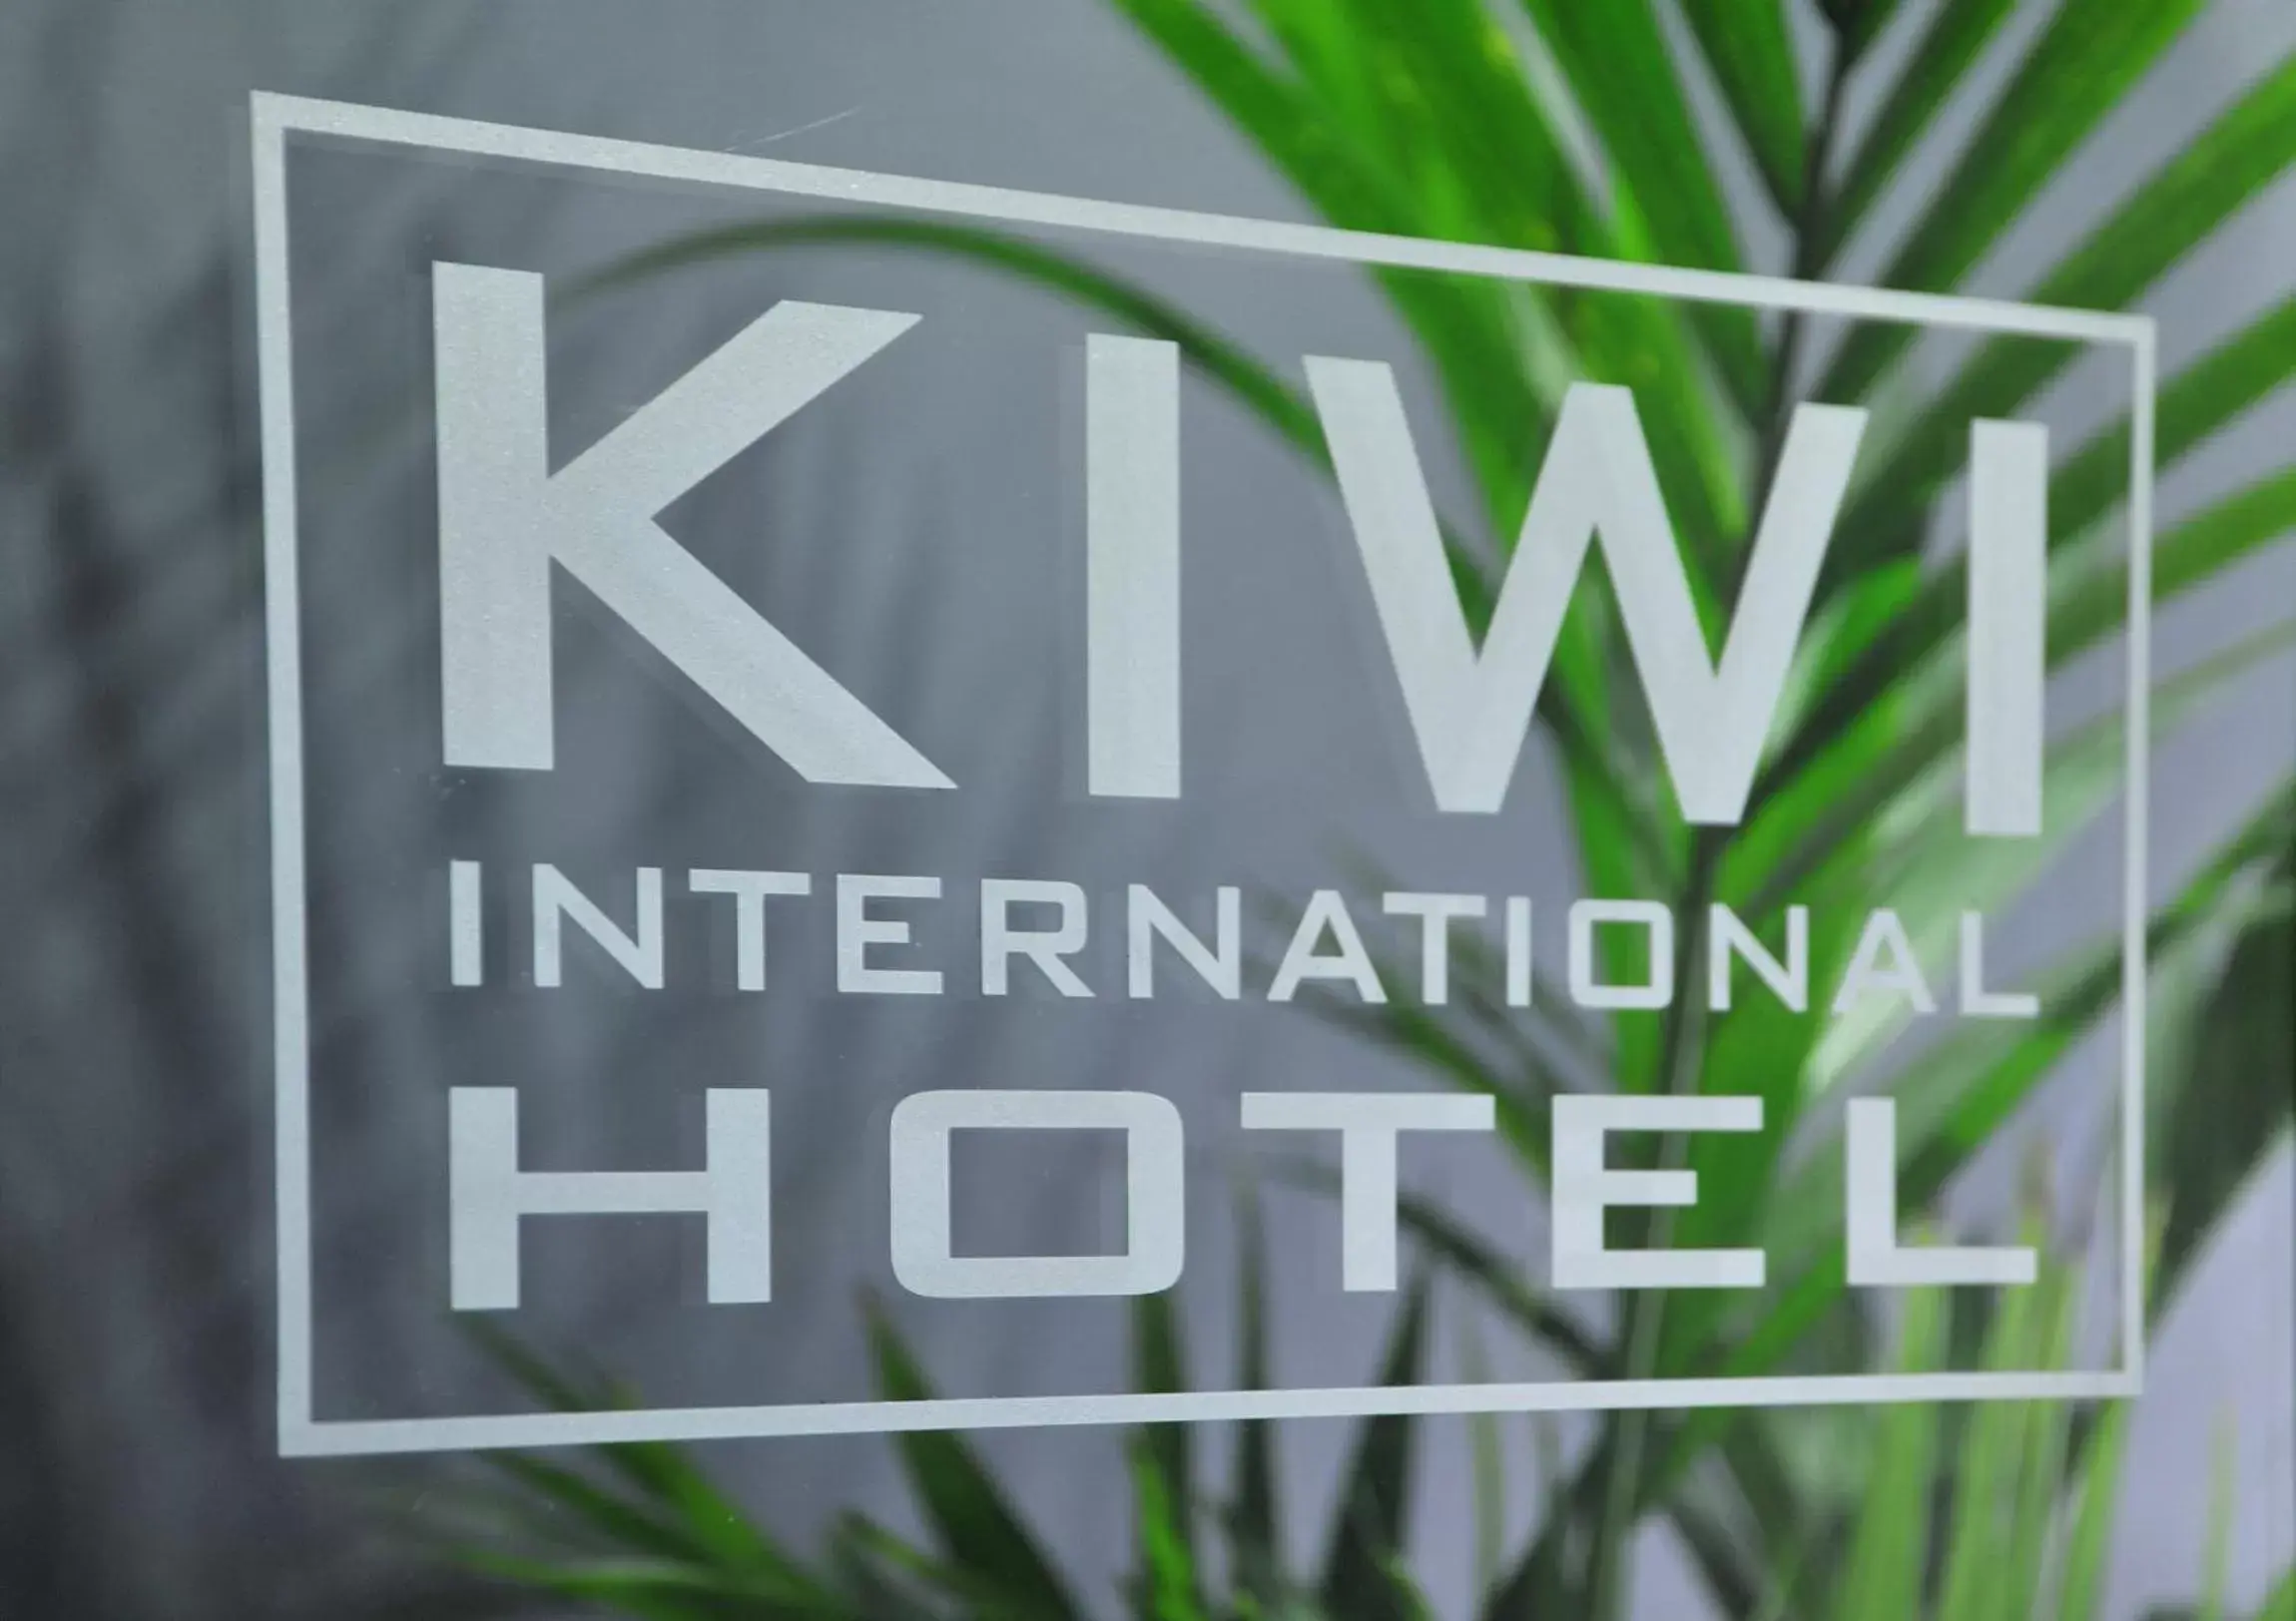 Decorative detail in Kiwi International Hotel